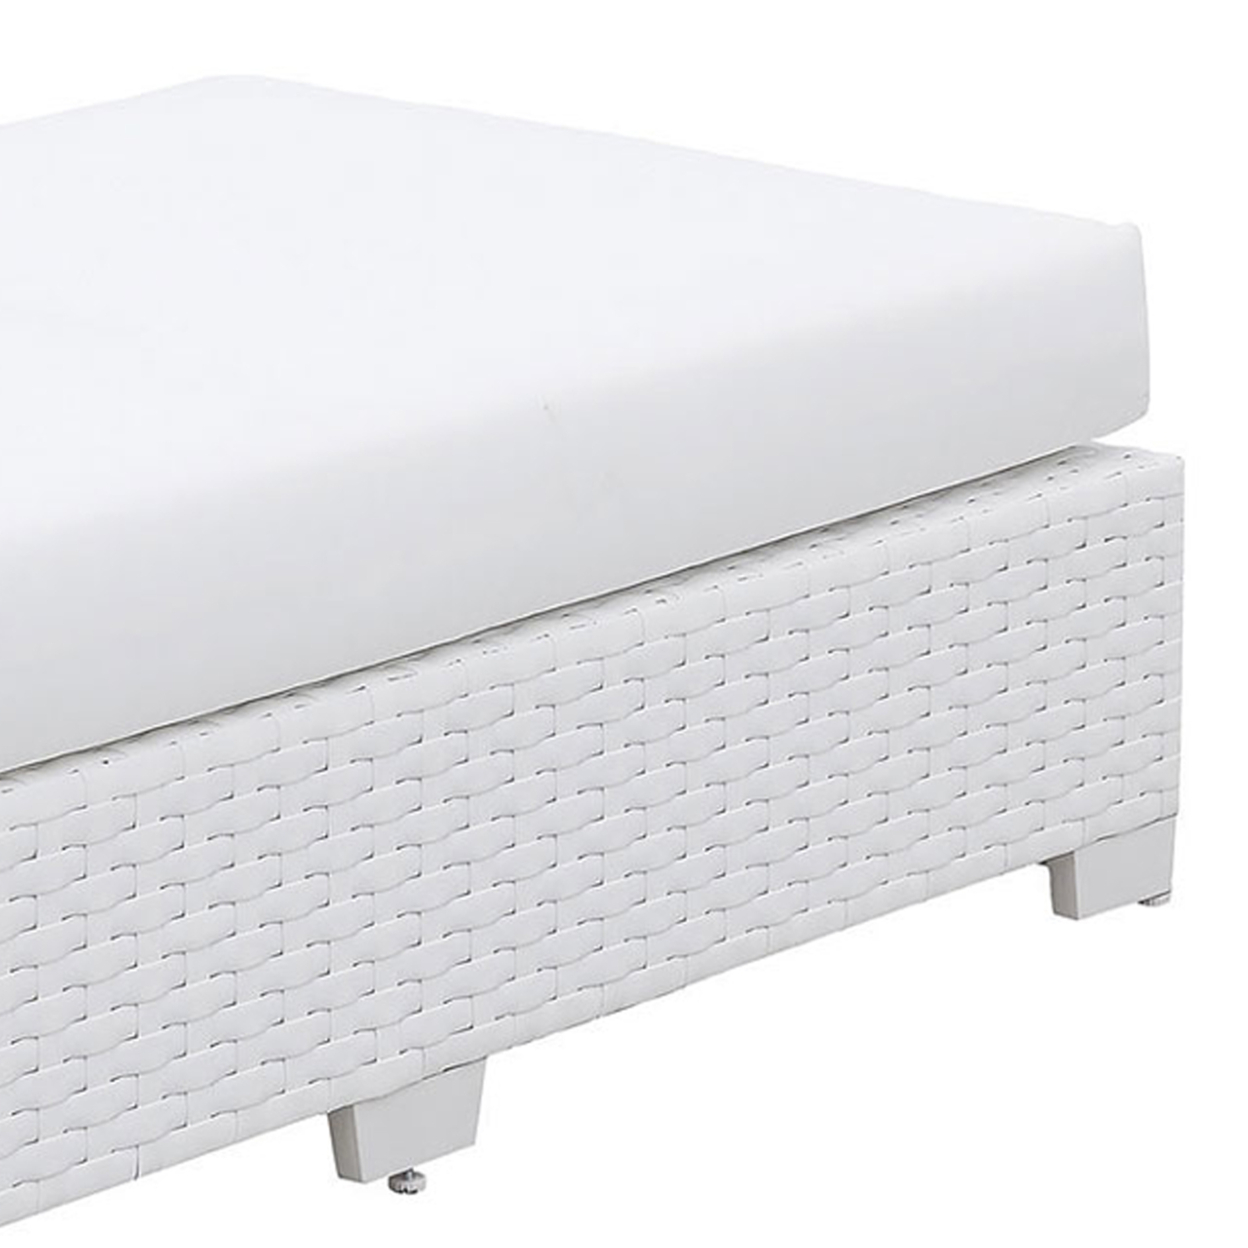 Wicker Aluminum Framed Bench With Fabric Cushion Seat, White- Saltoro Sherpi